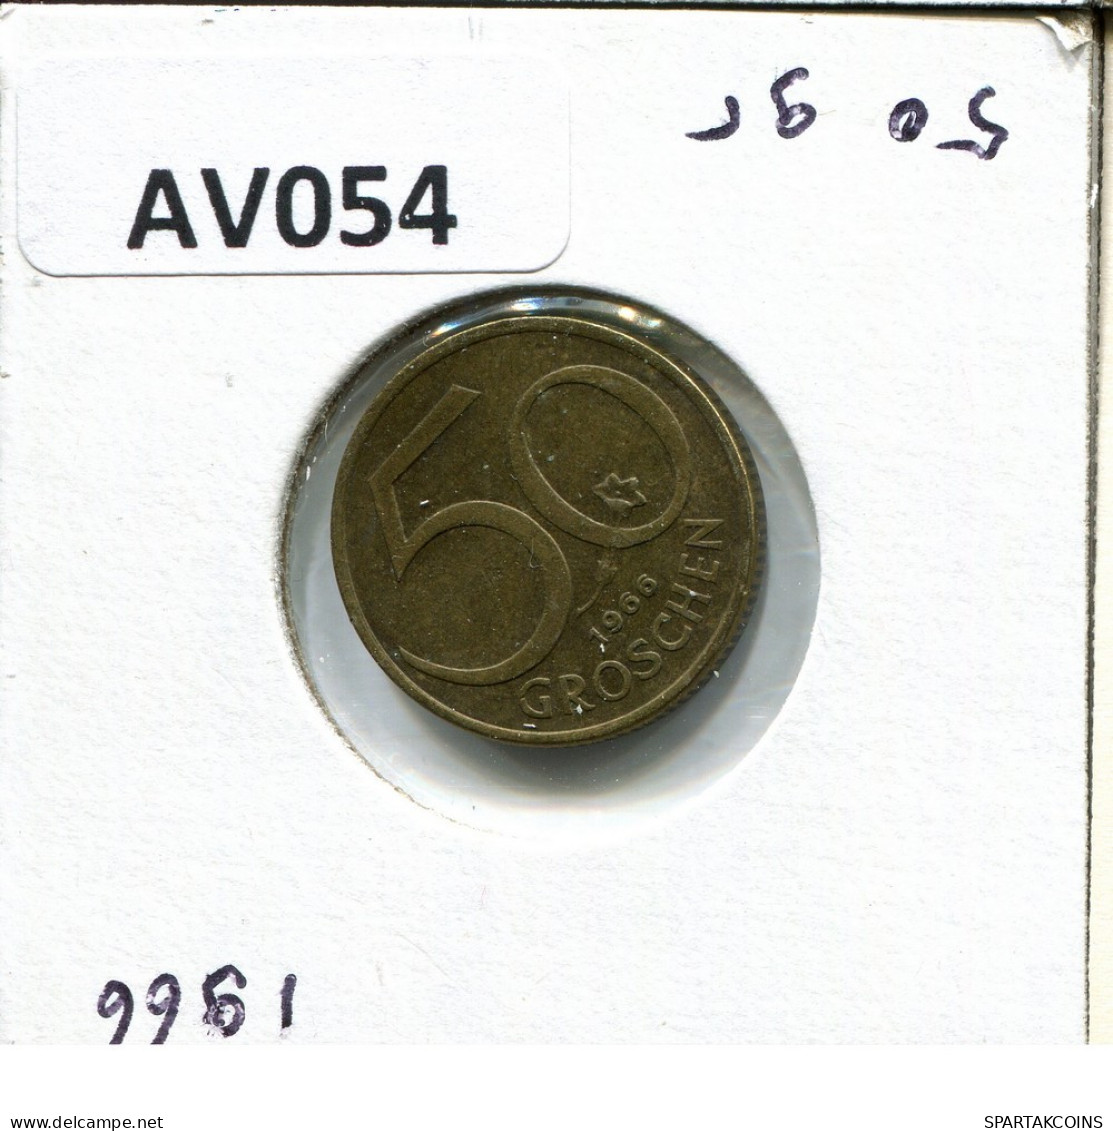 50 GROSCHEN 1966 AUSTRIA Coin #AV054.U.A - Autriche